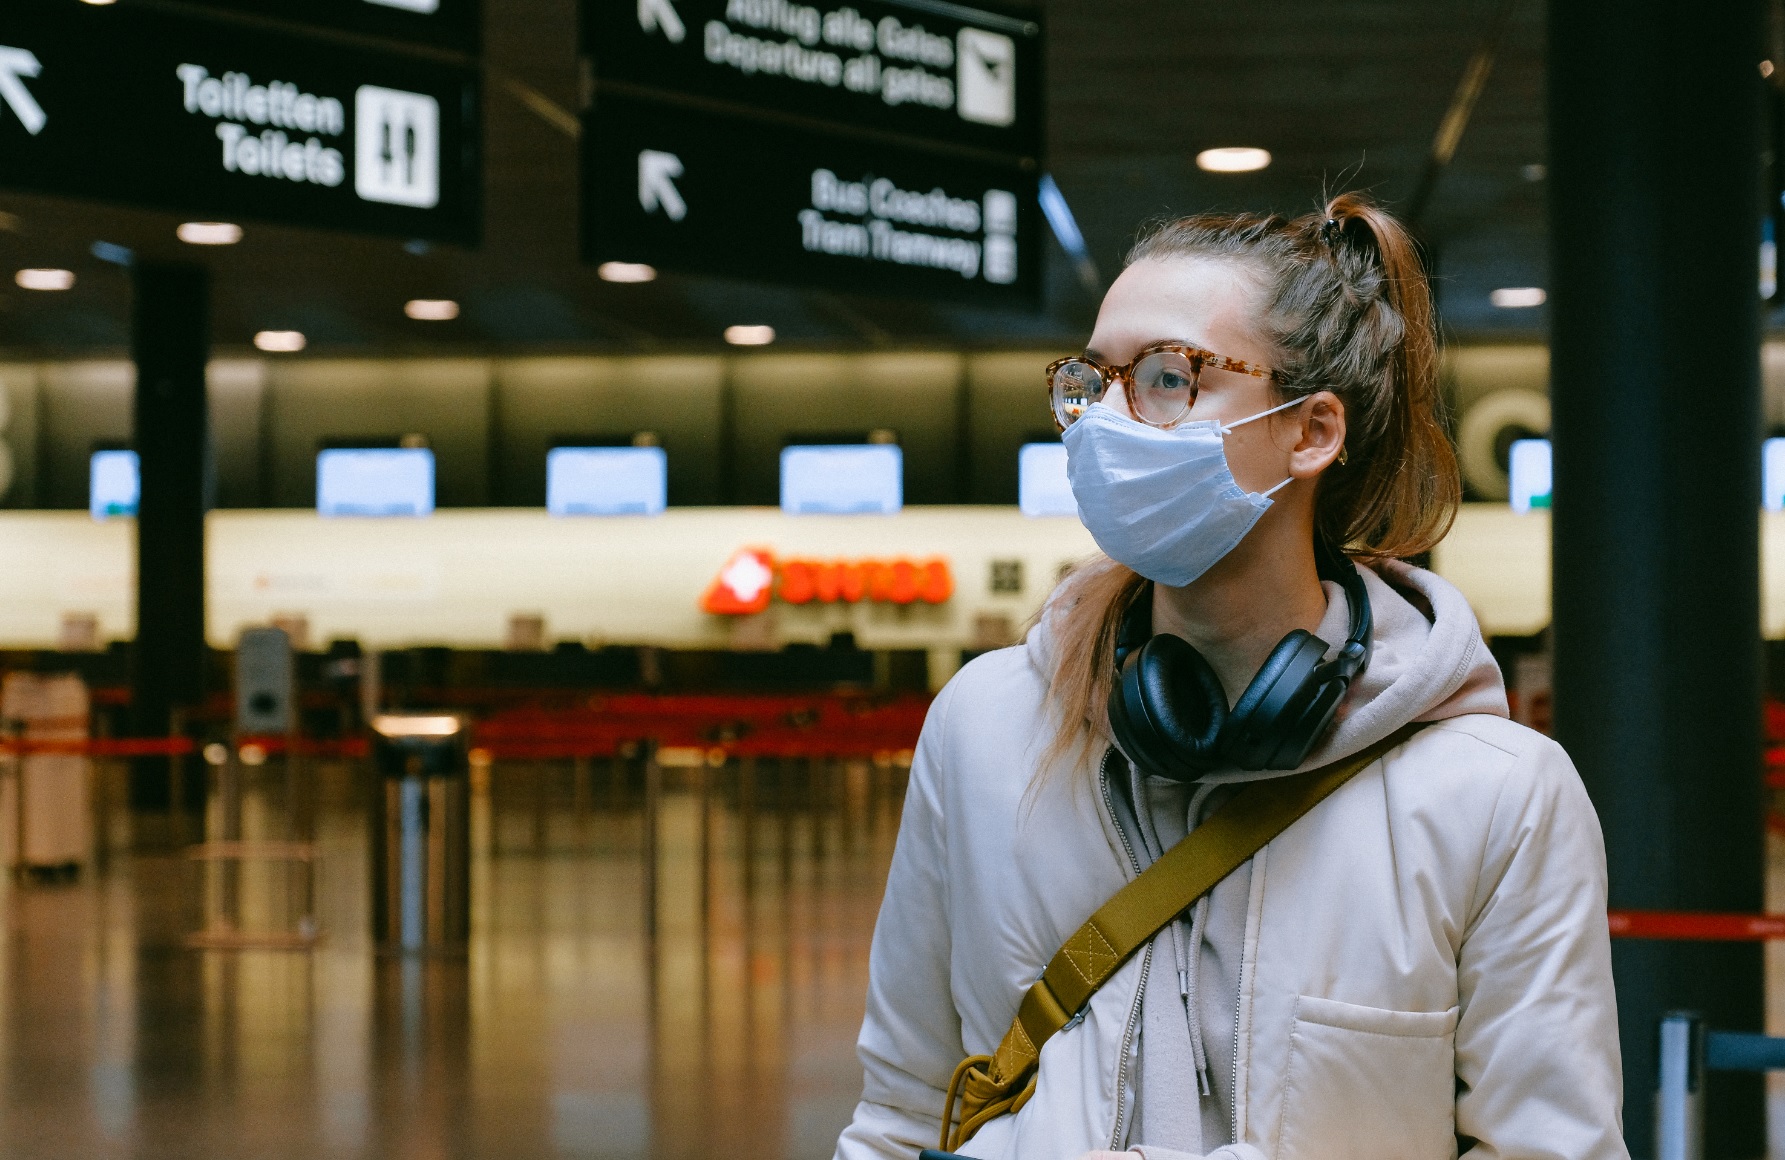 Safe International Travel During a Pandemic